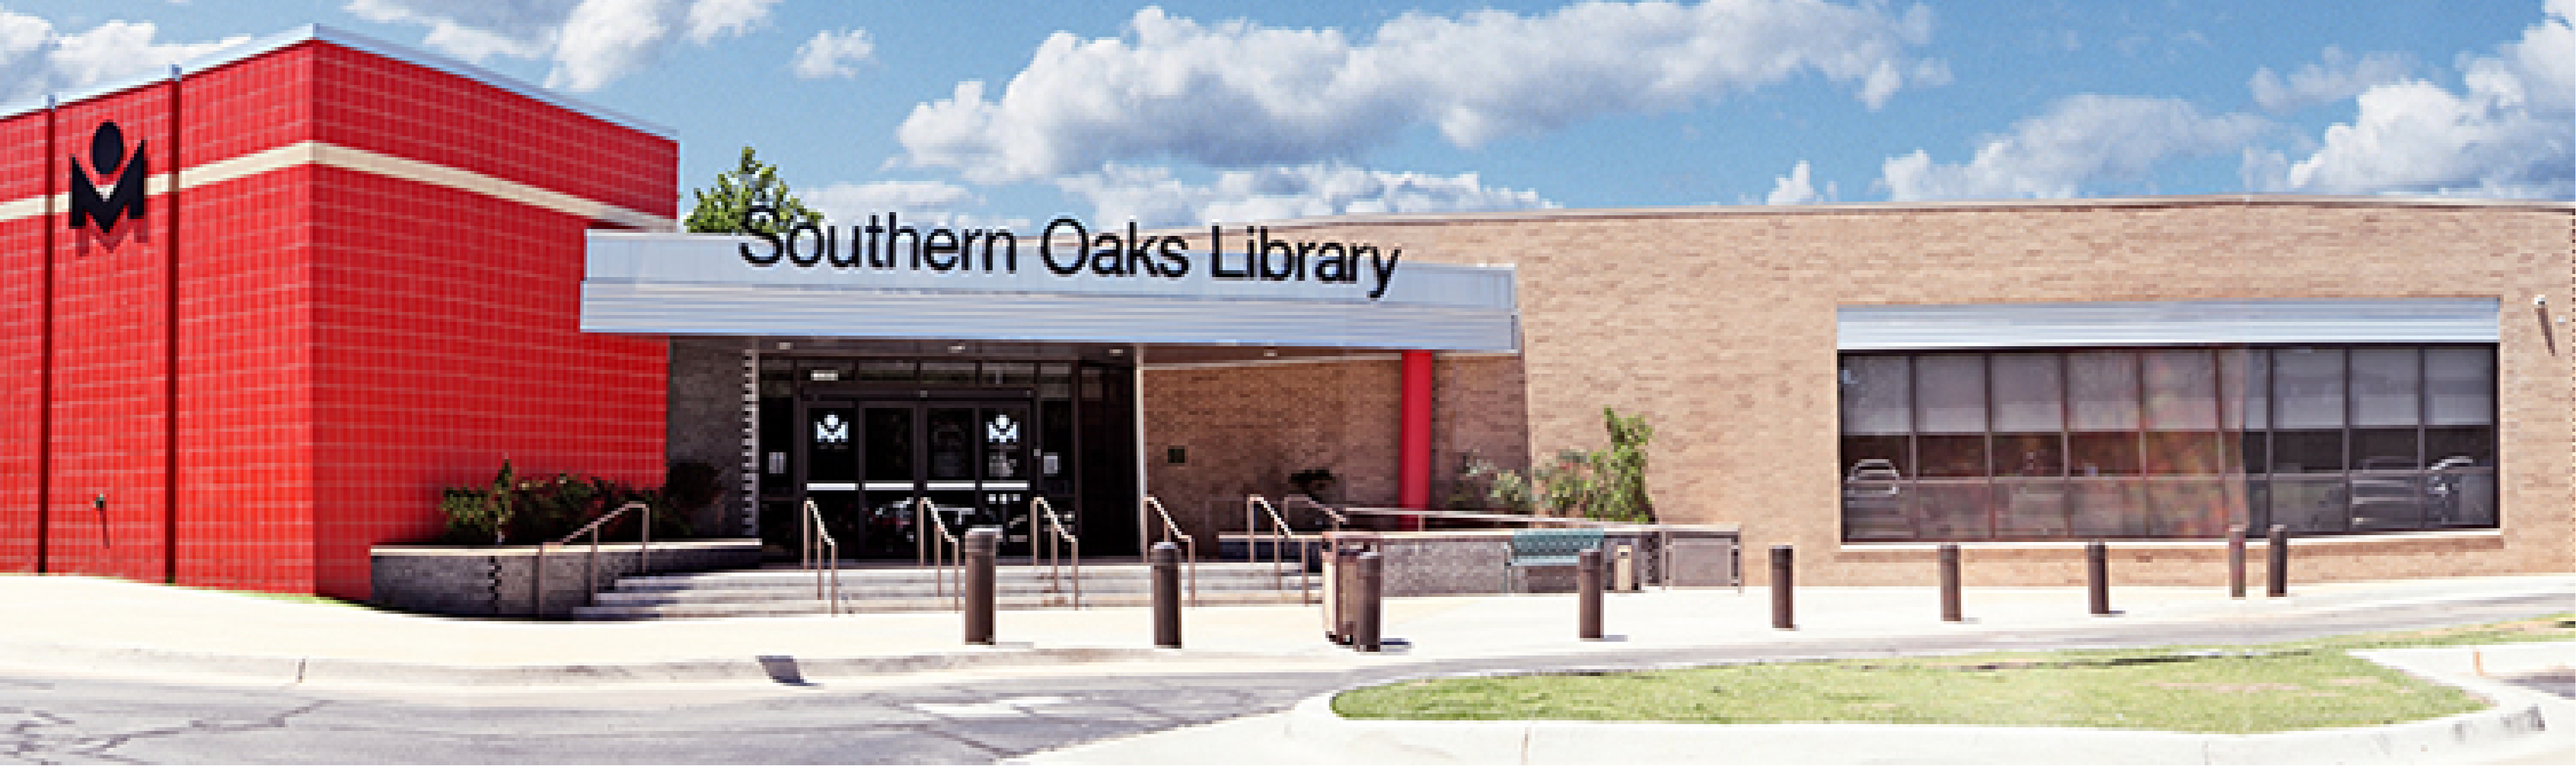 Southern Oaks Library Metropolitan Library System